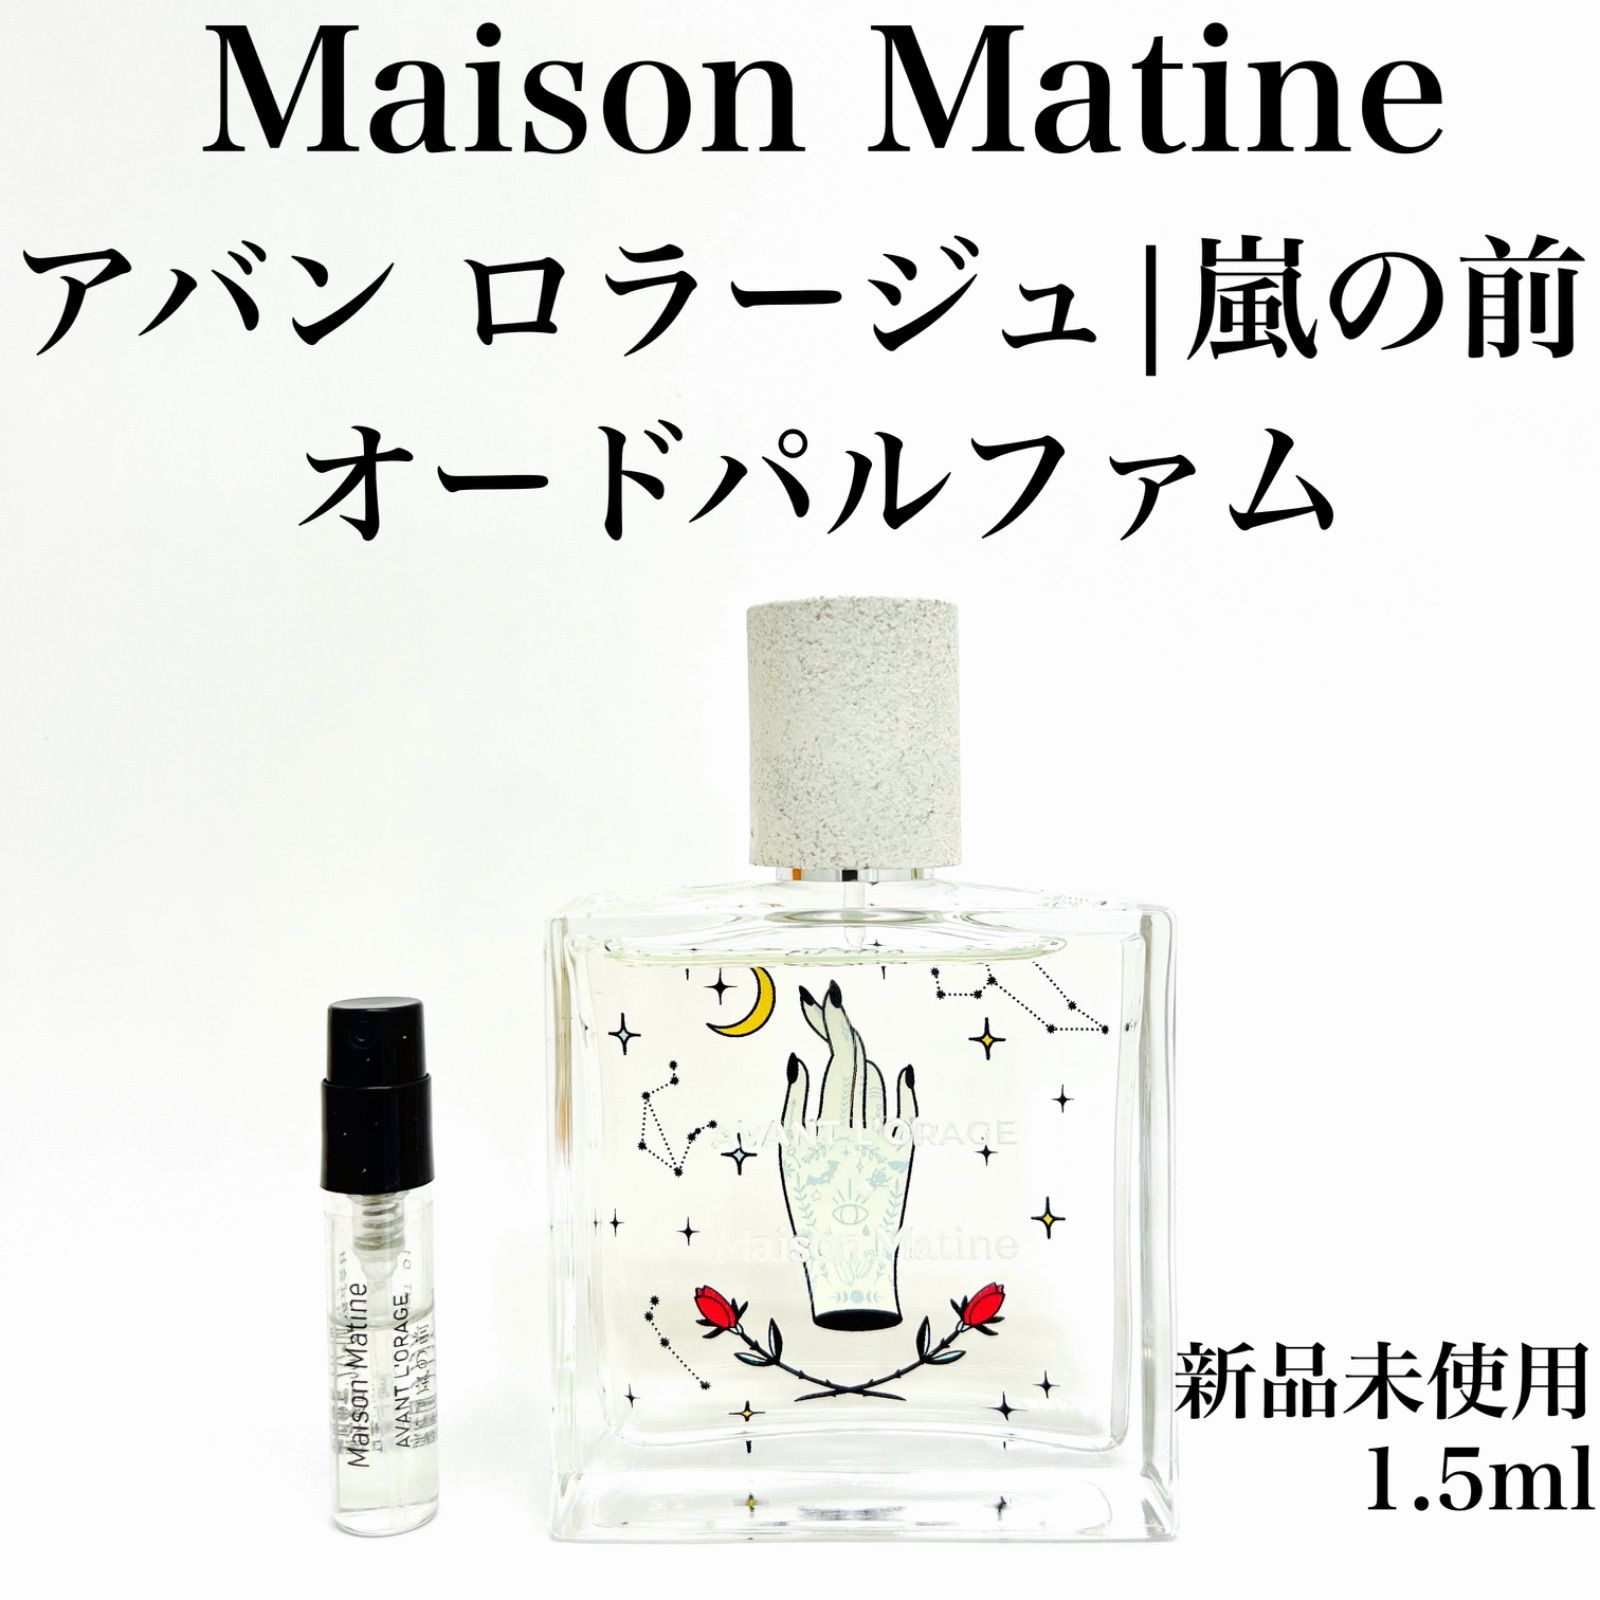 Maison Matine WARNI WARNI オードパルファム 50ml - 香水(ユニセックス)